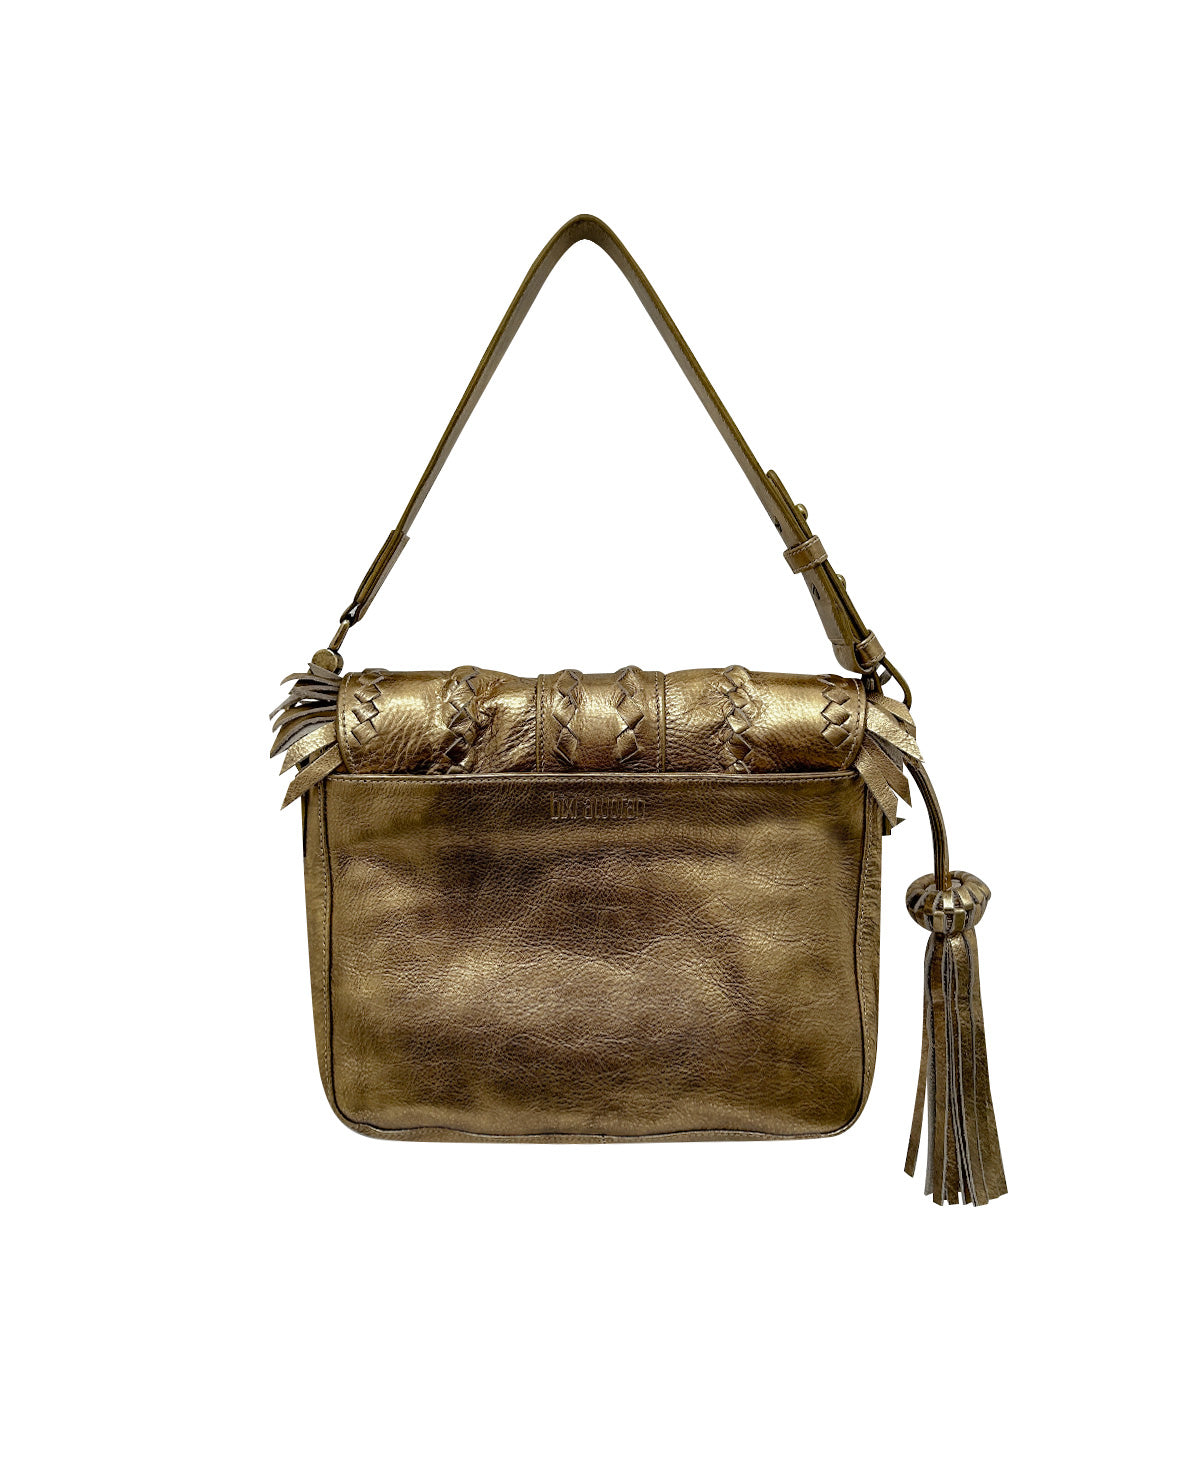 Metallic Gold SENECA Leather Bag with Braids & Frings Details